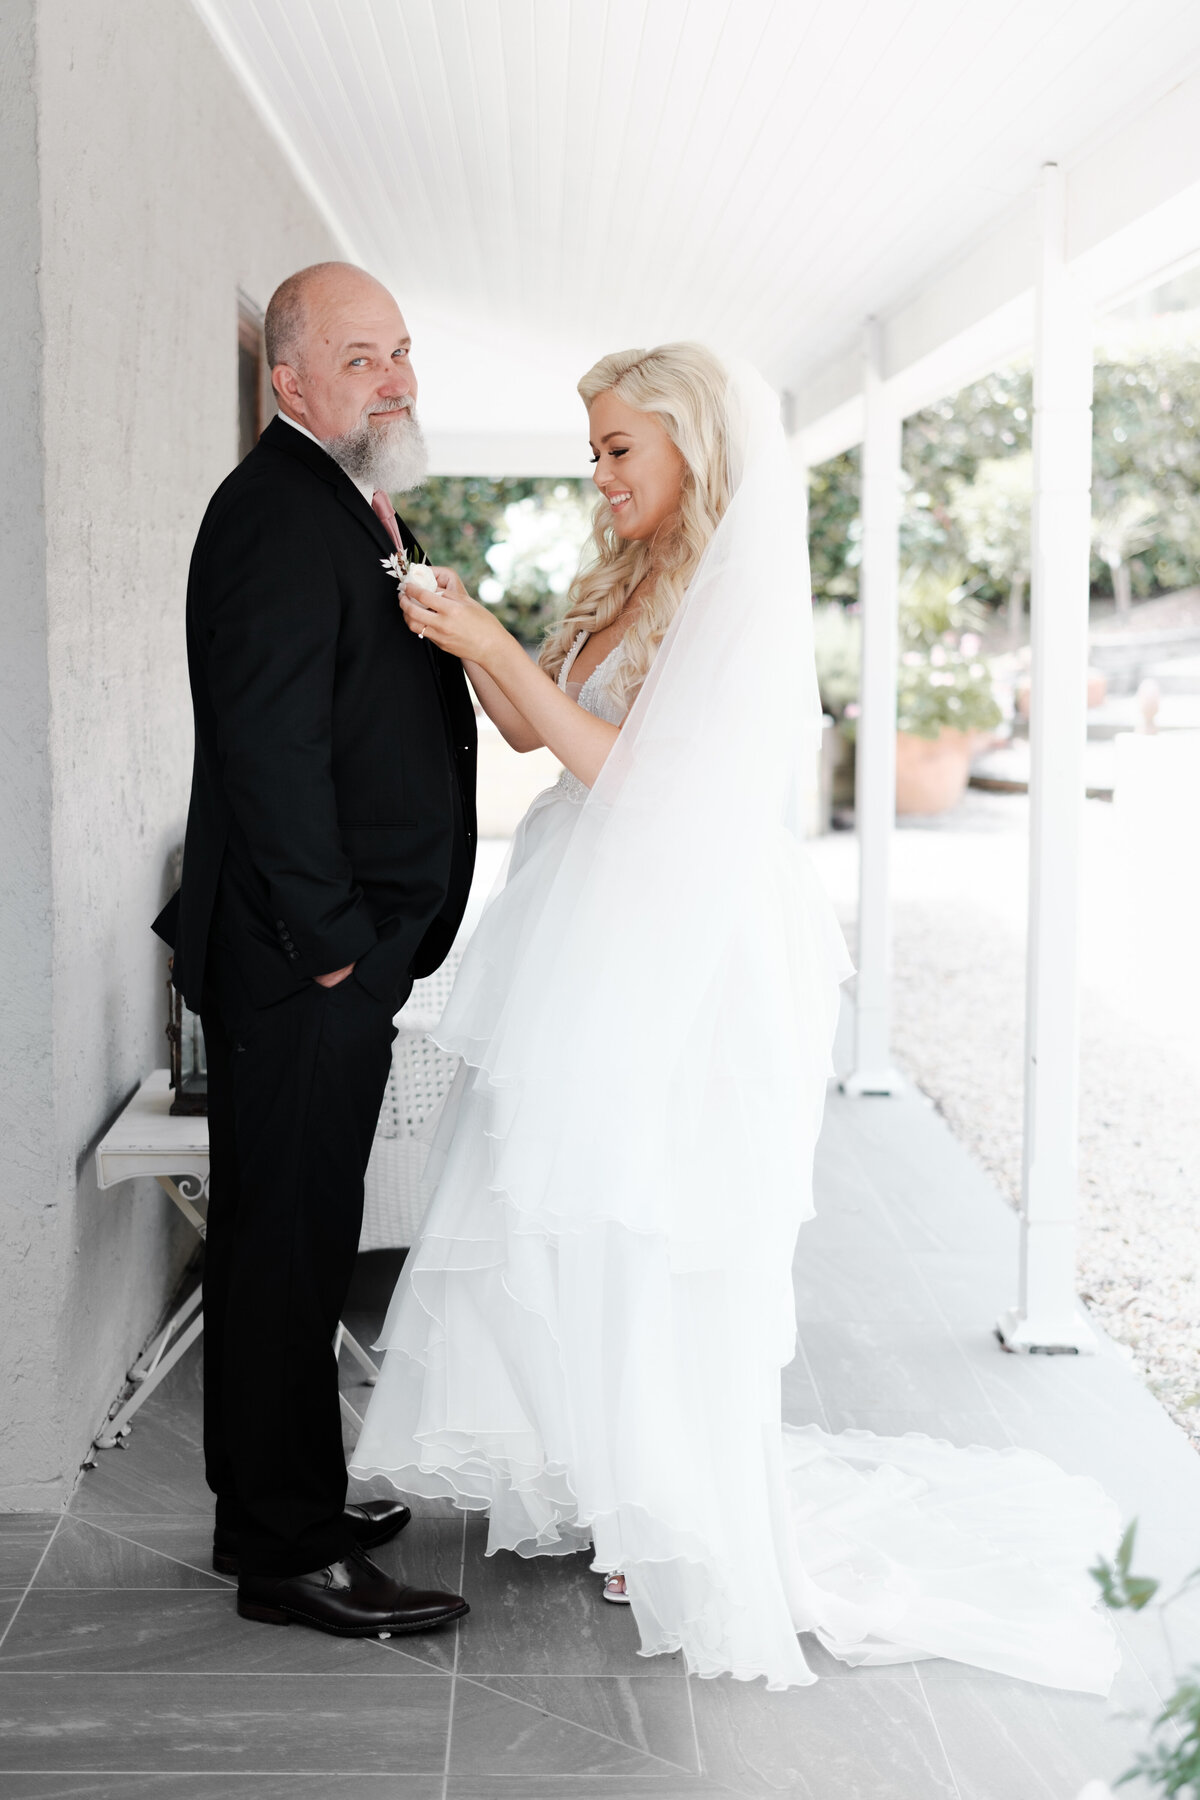 Abigail_Steven_Wedding_Images_Roam Ahead Weddings - 168